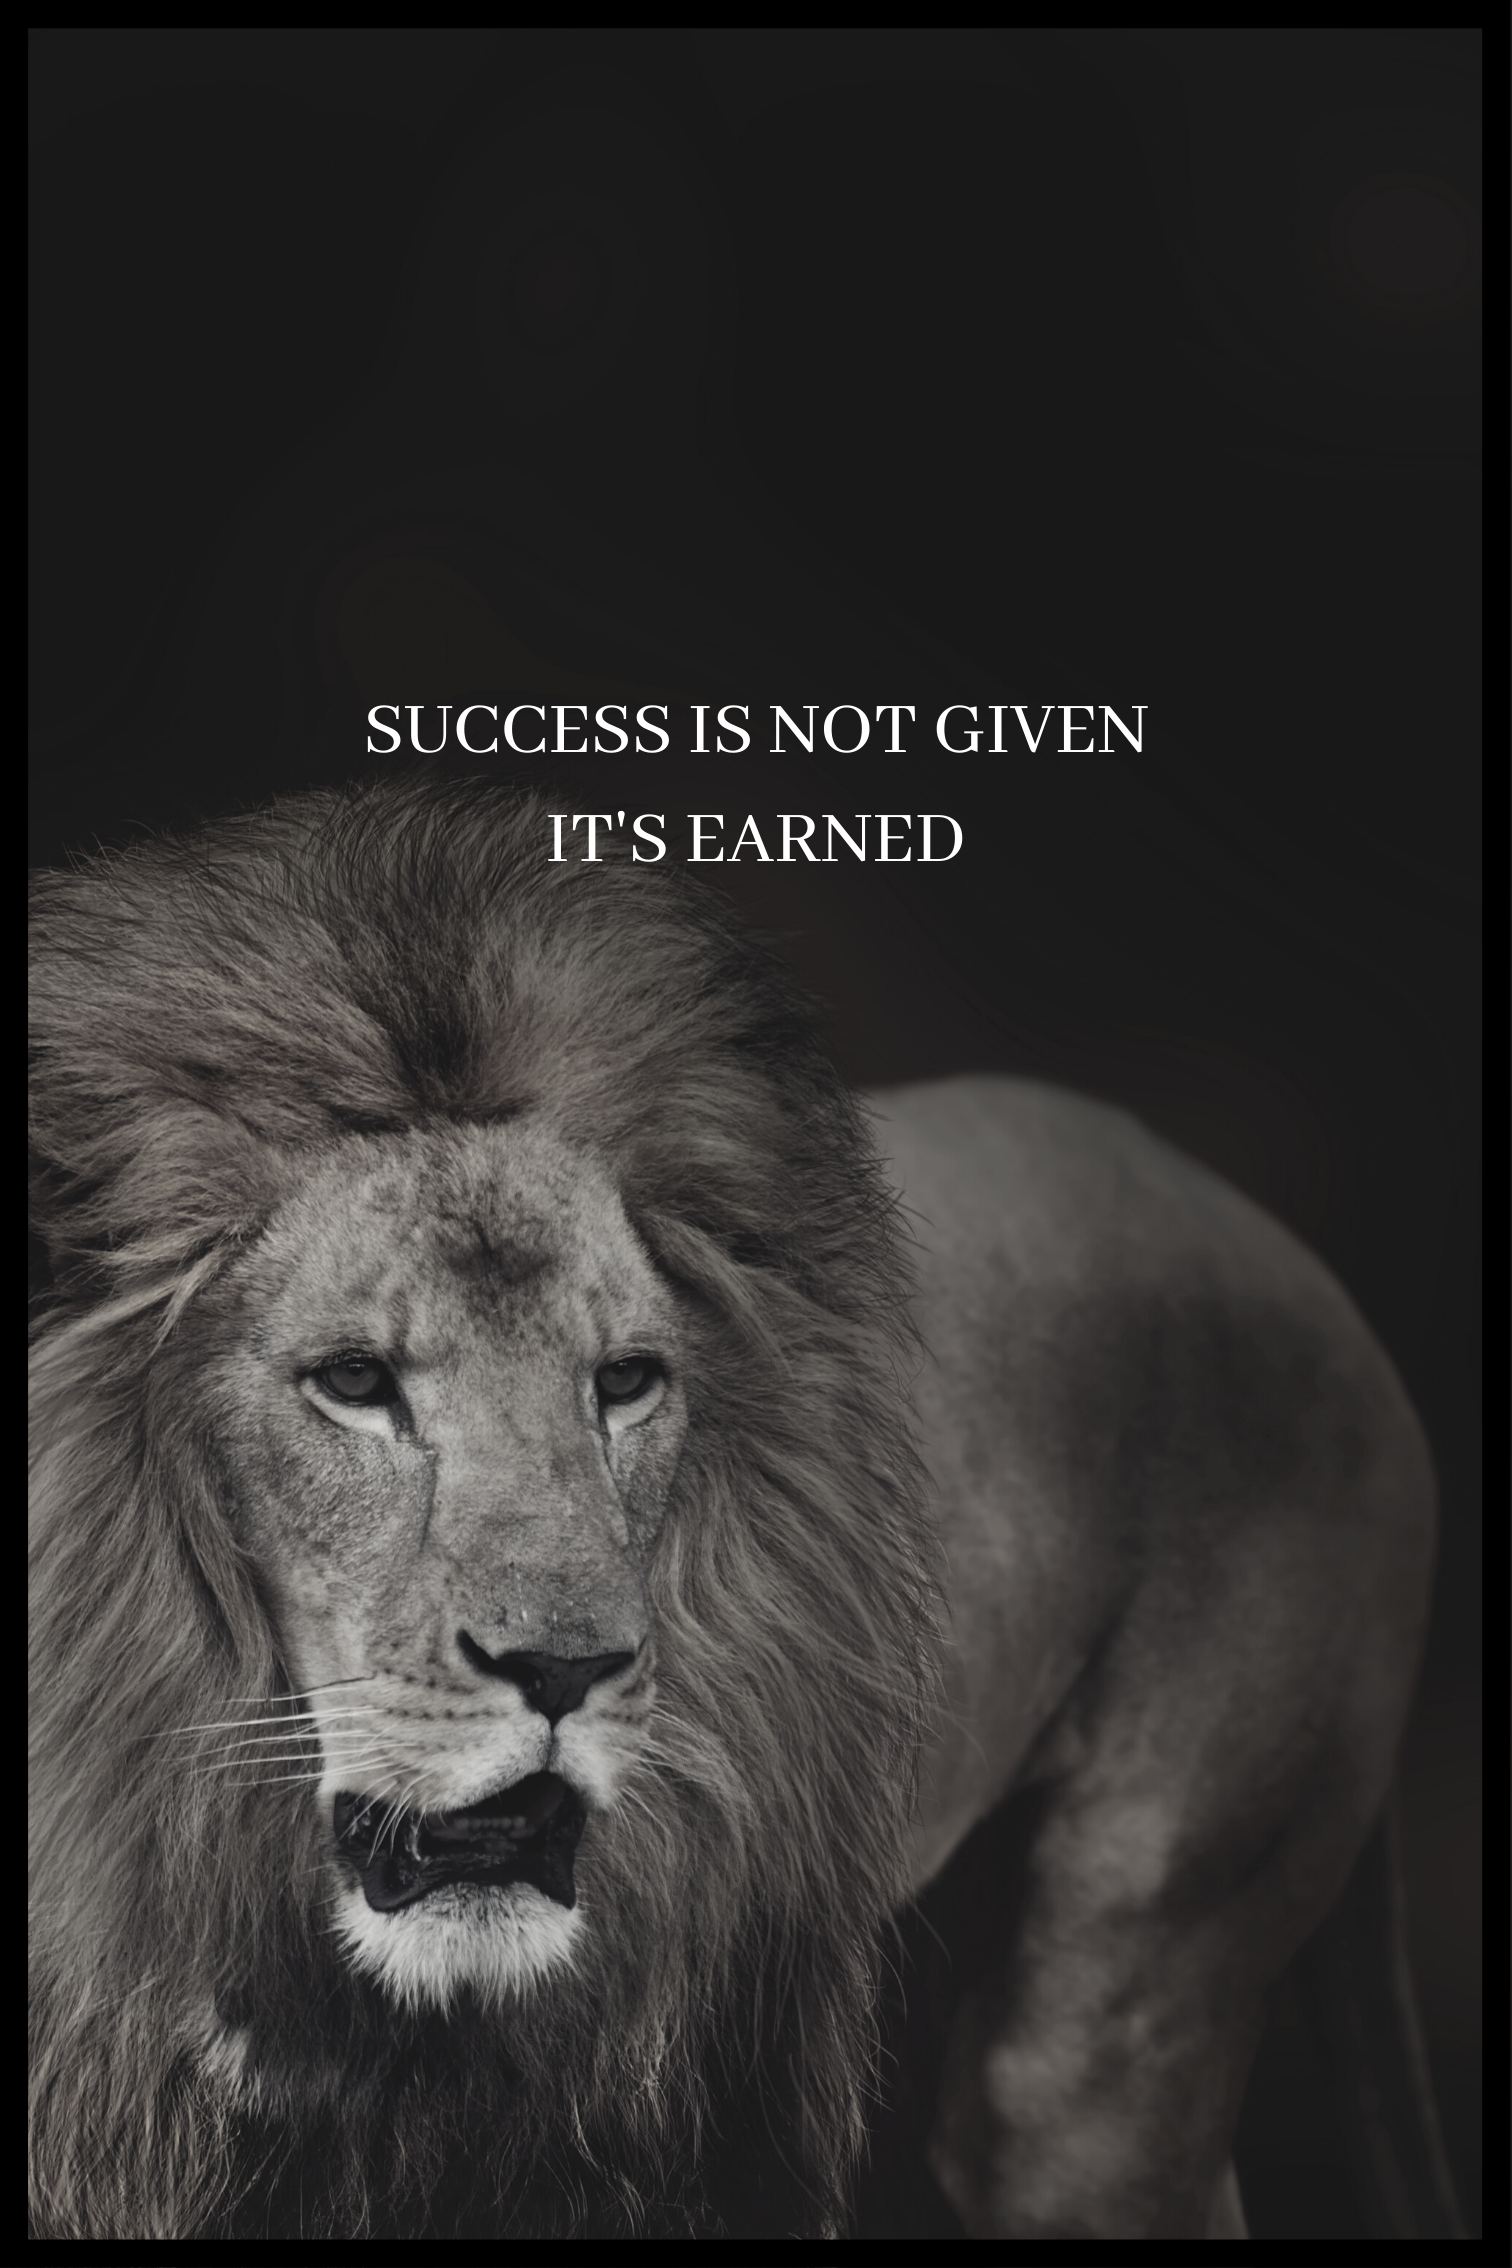 Framgång ges inte affisch